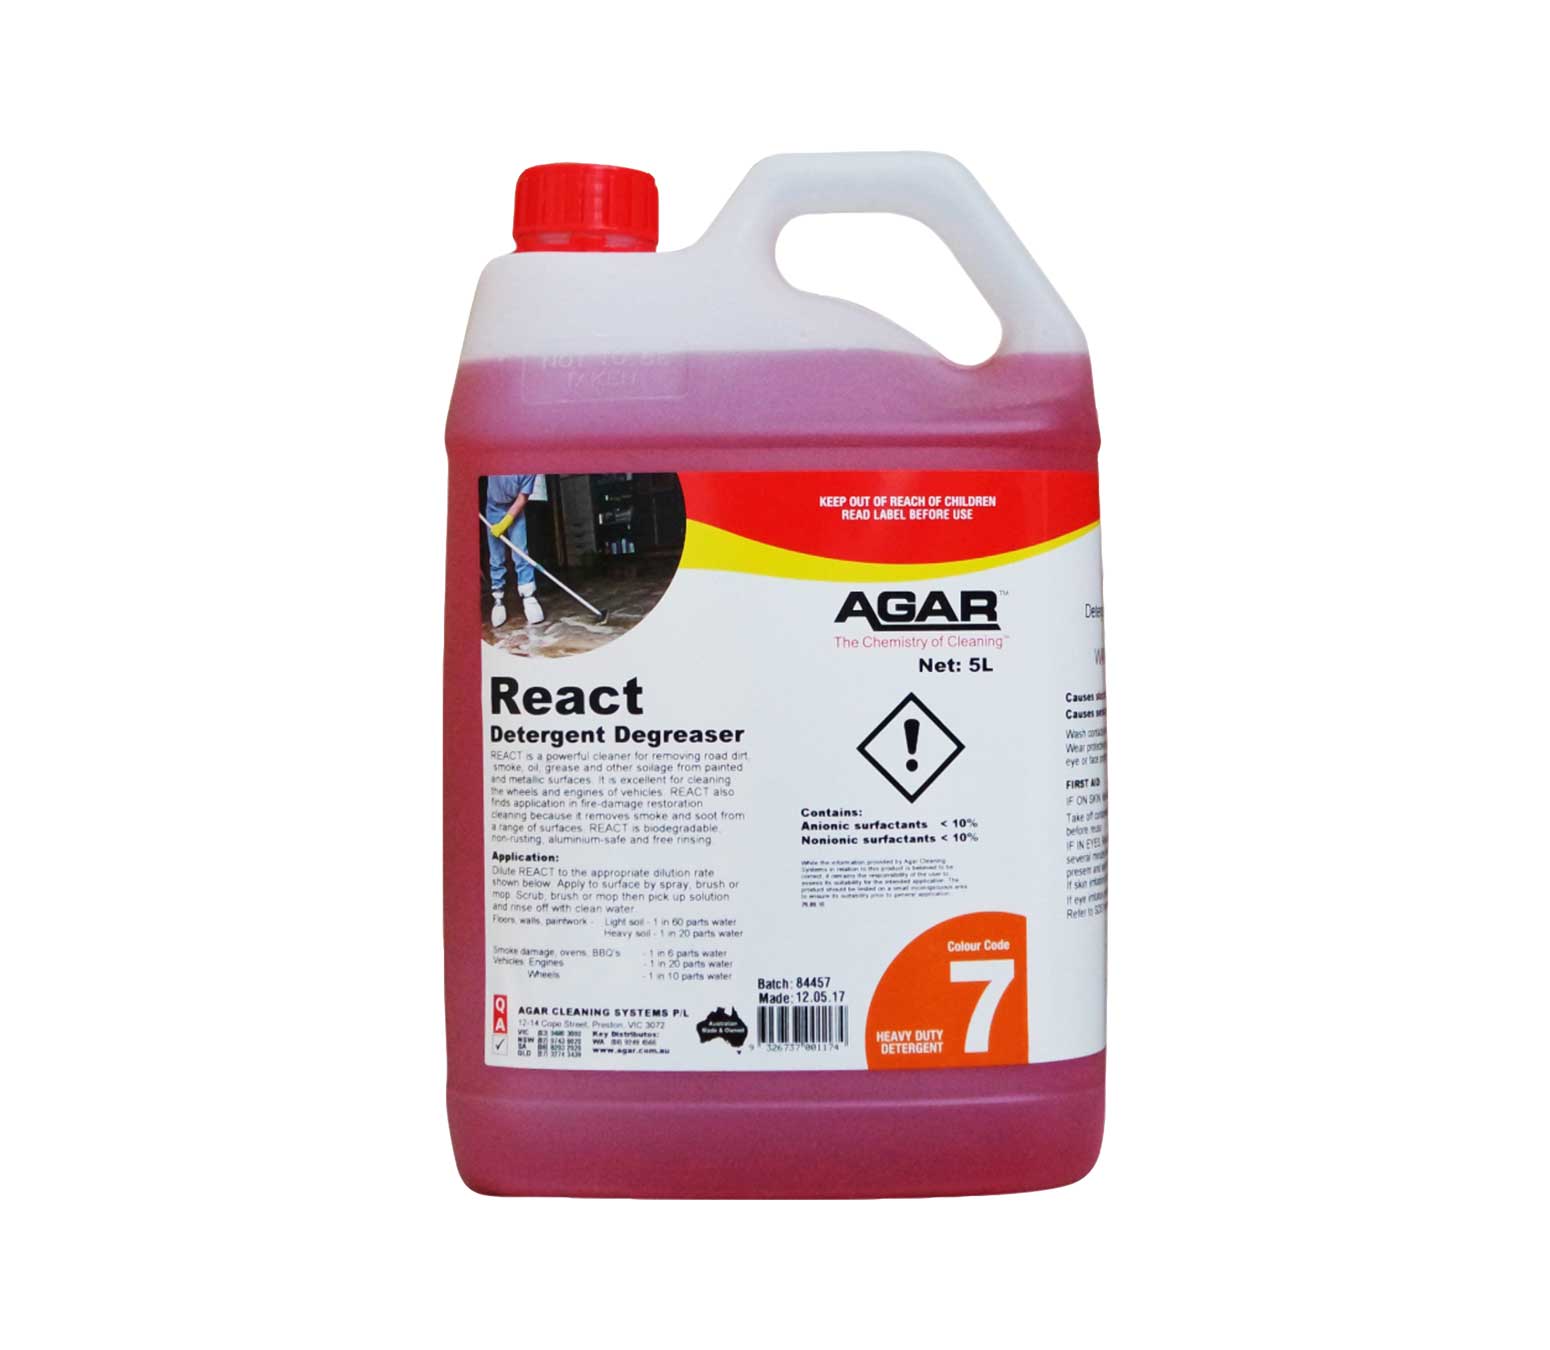 React - Heavy Duty Detergent Degrease.